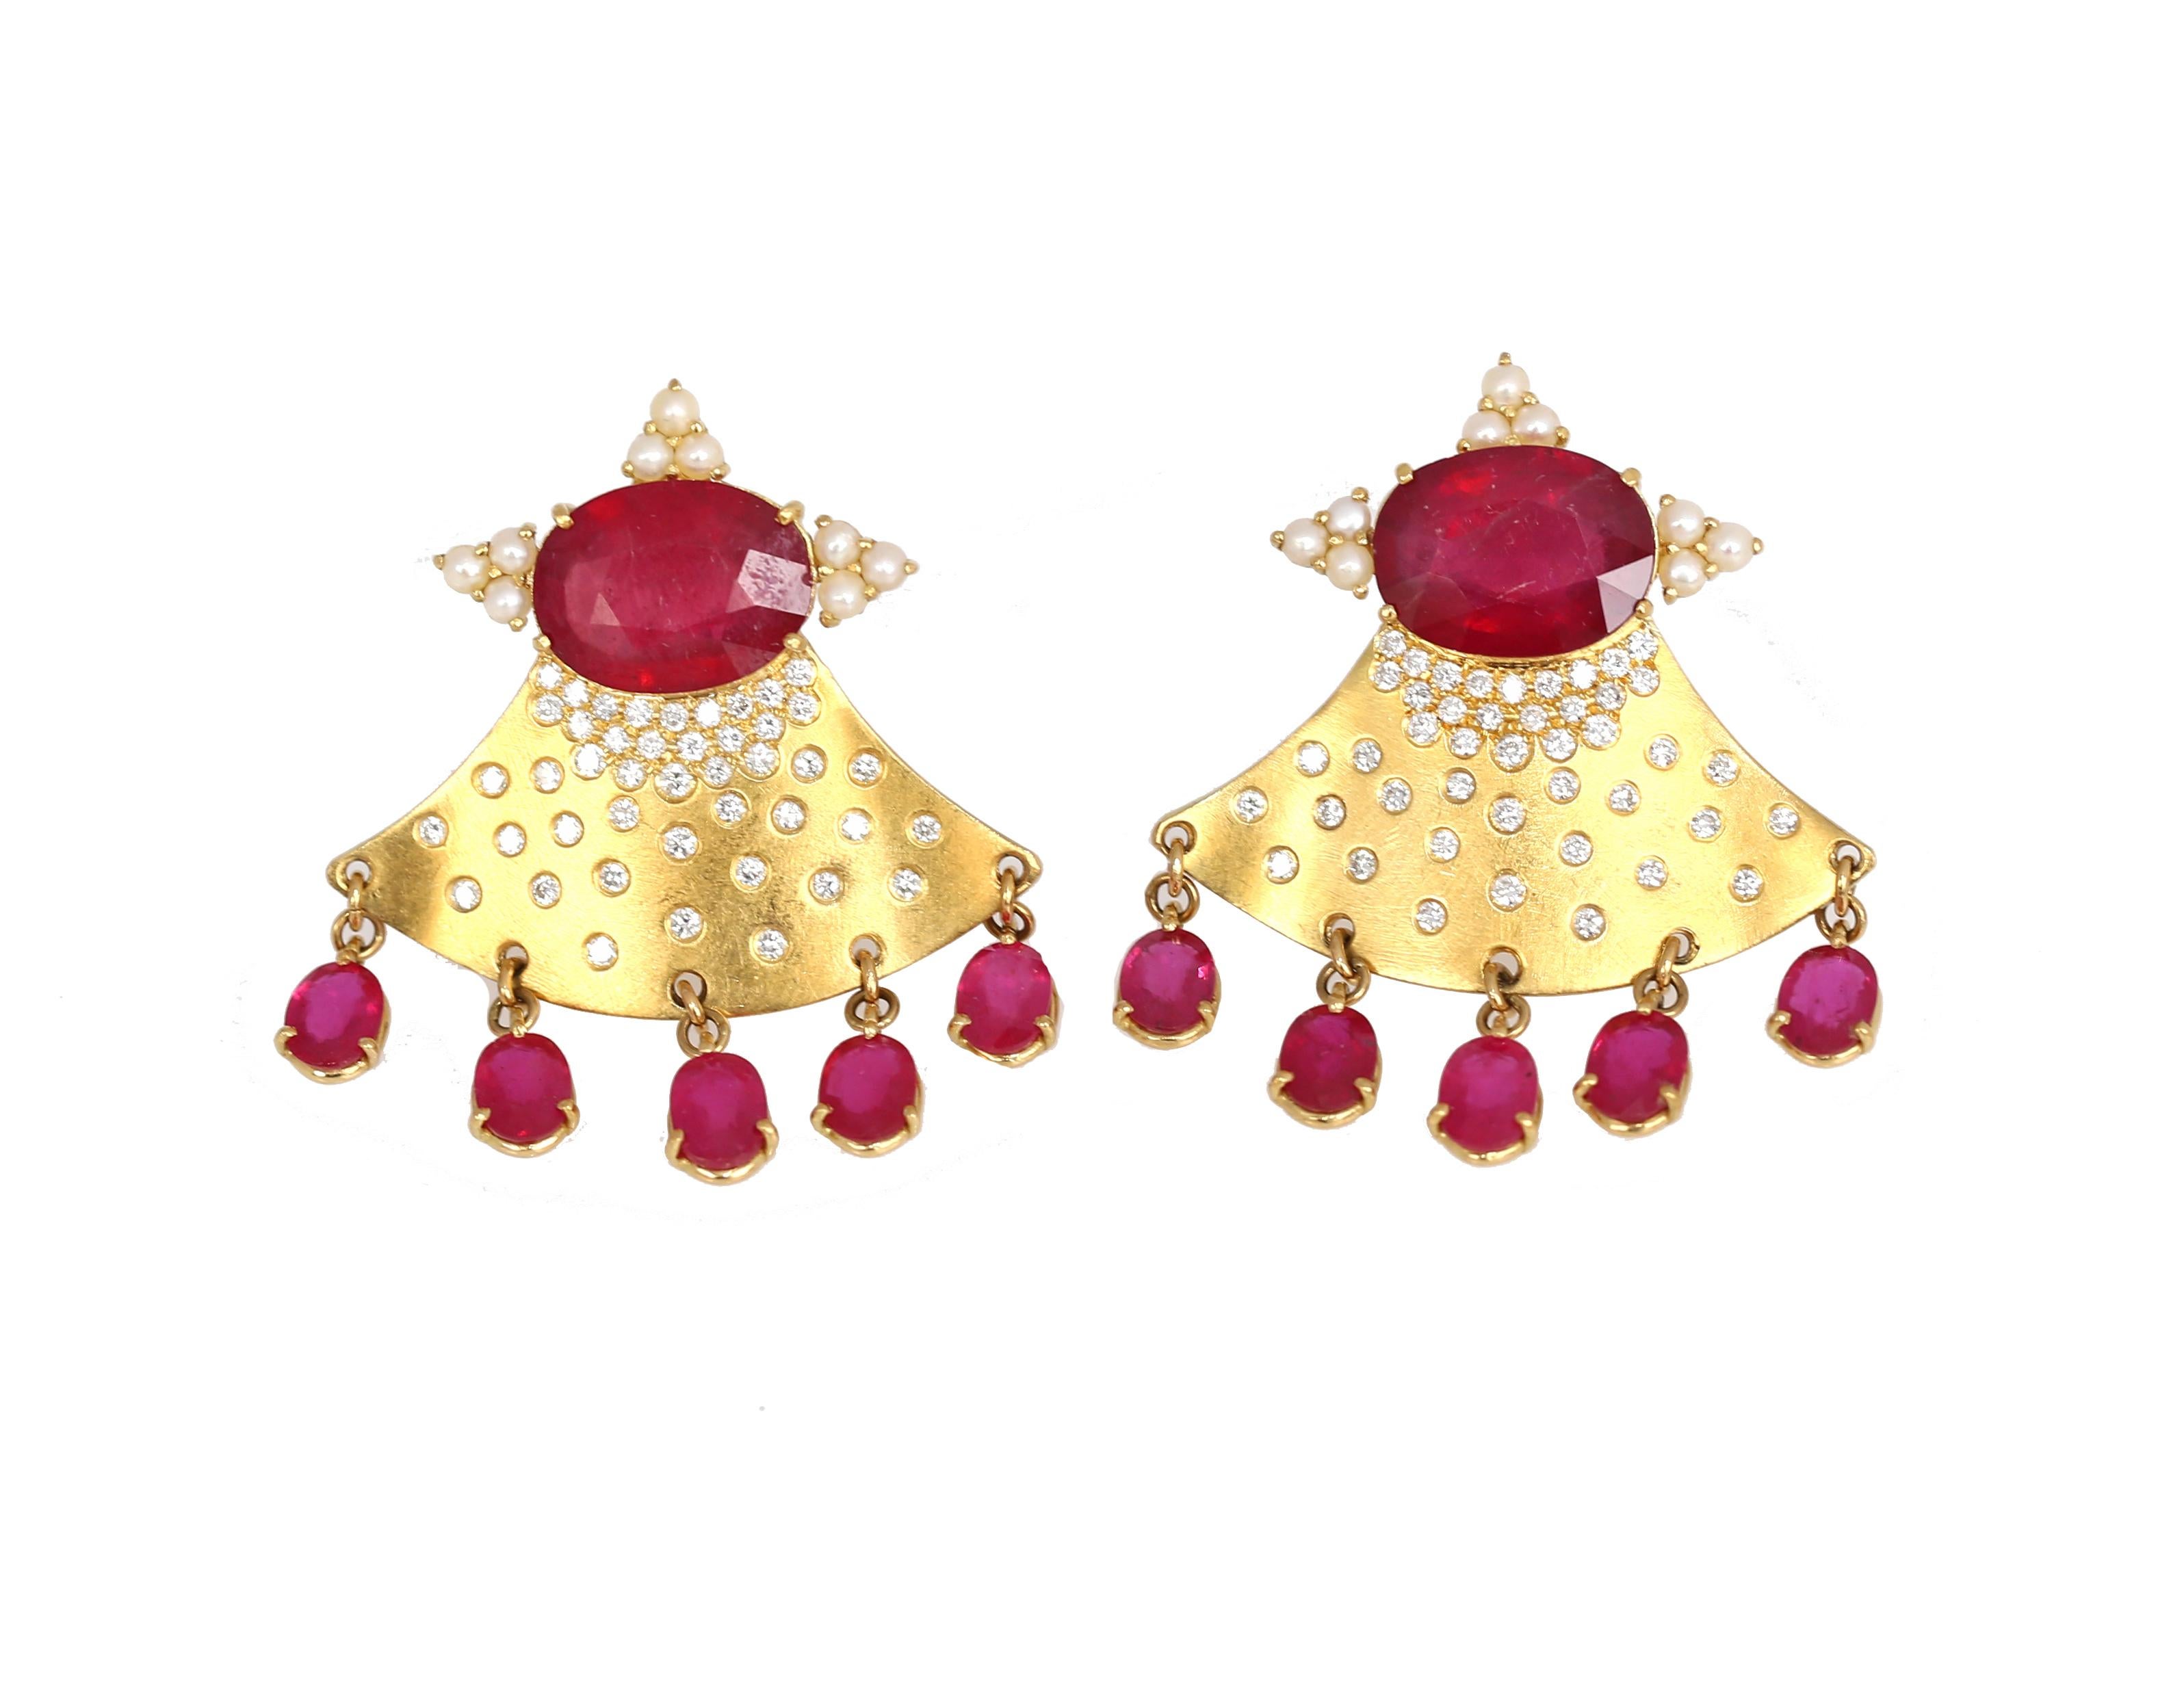 Rubies Diamonds Pearls Gold Whimsical Earrings, 2000 4